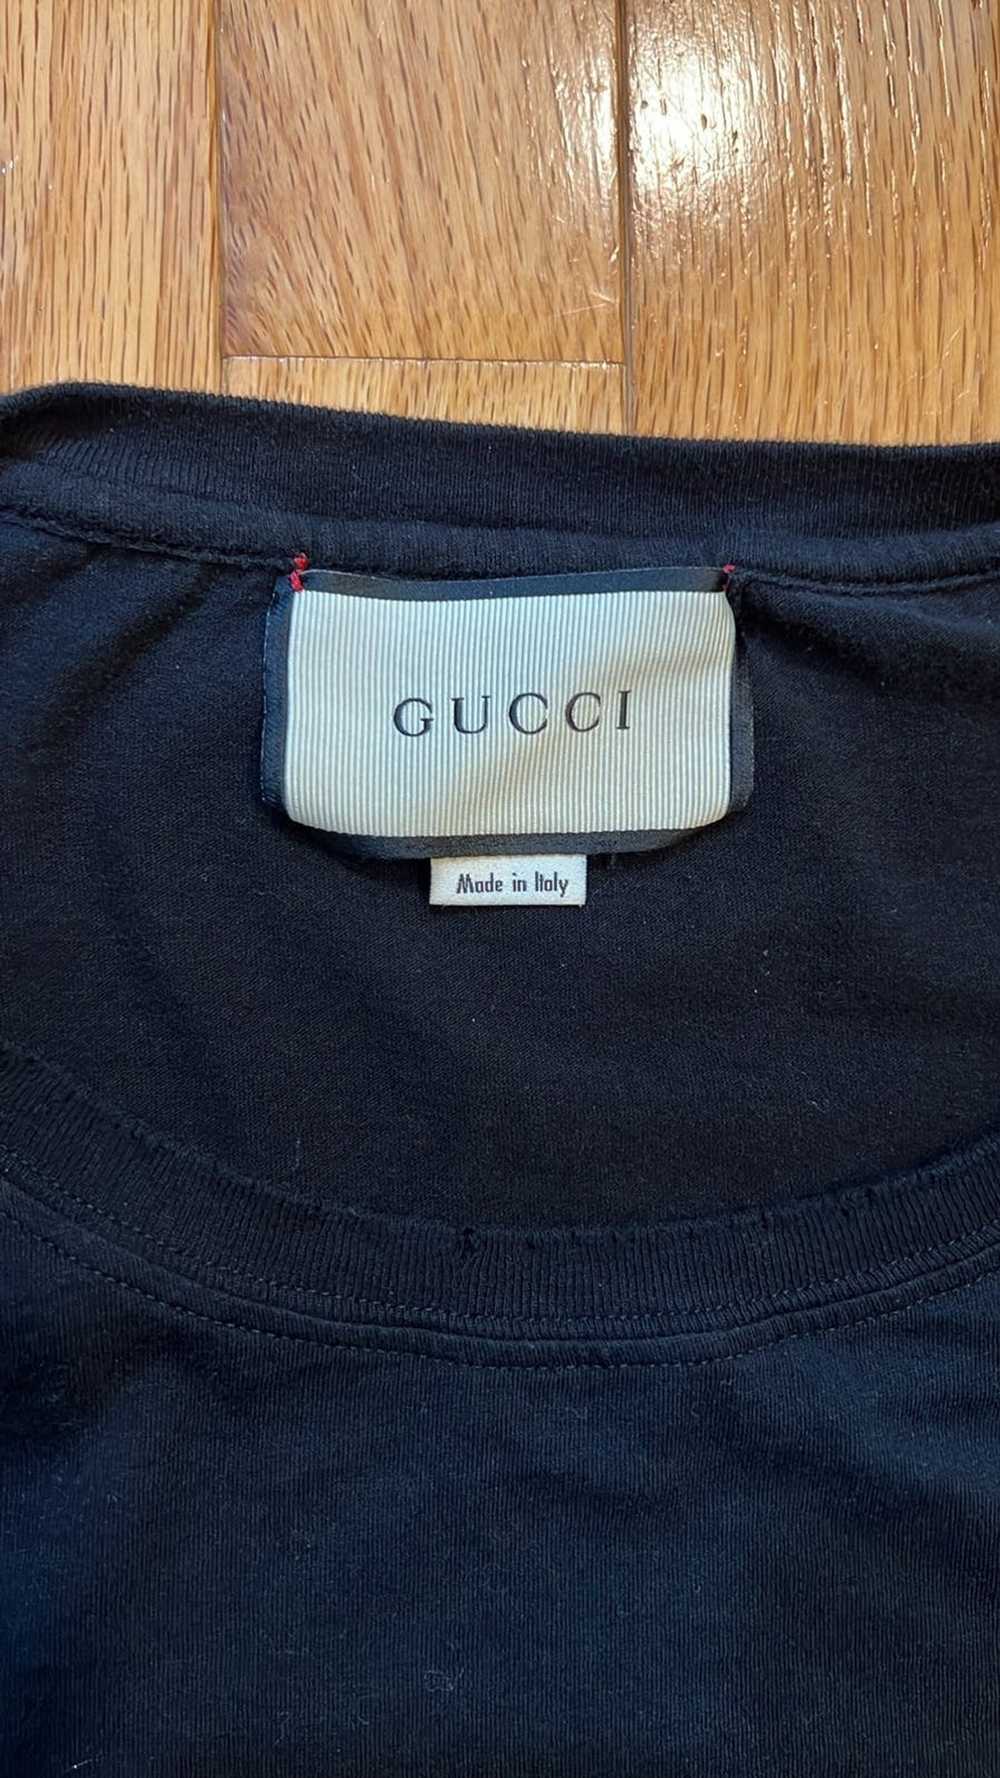 Gucci Gucci t-shirt - image 2